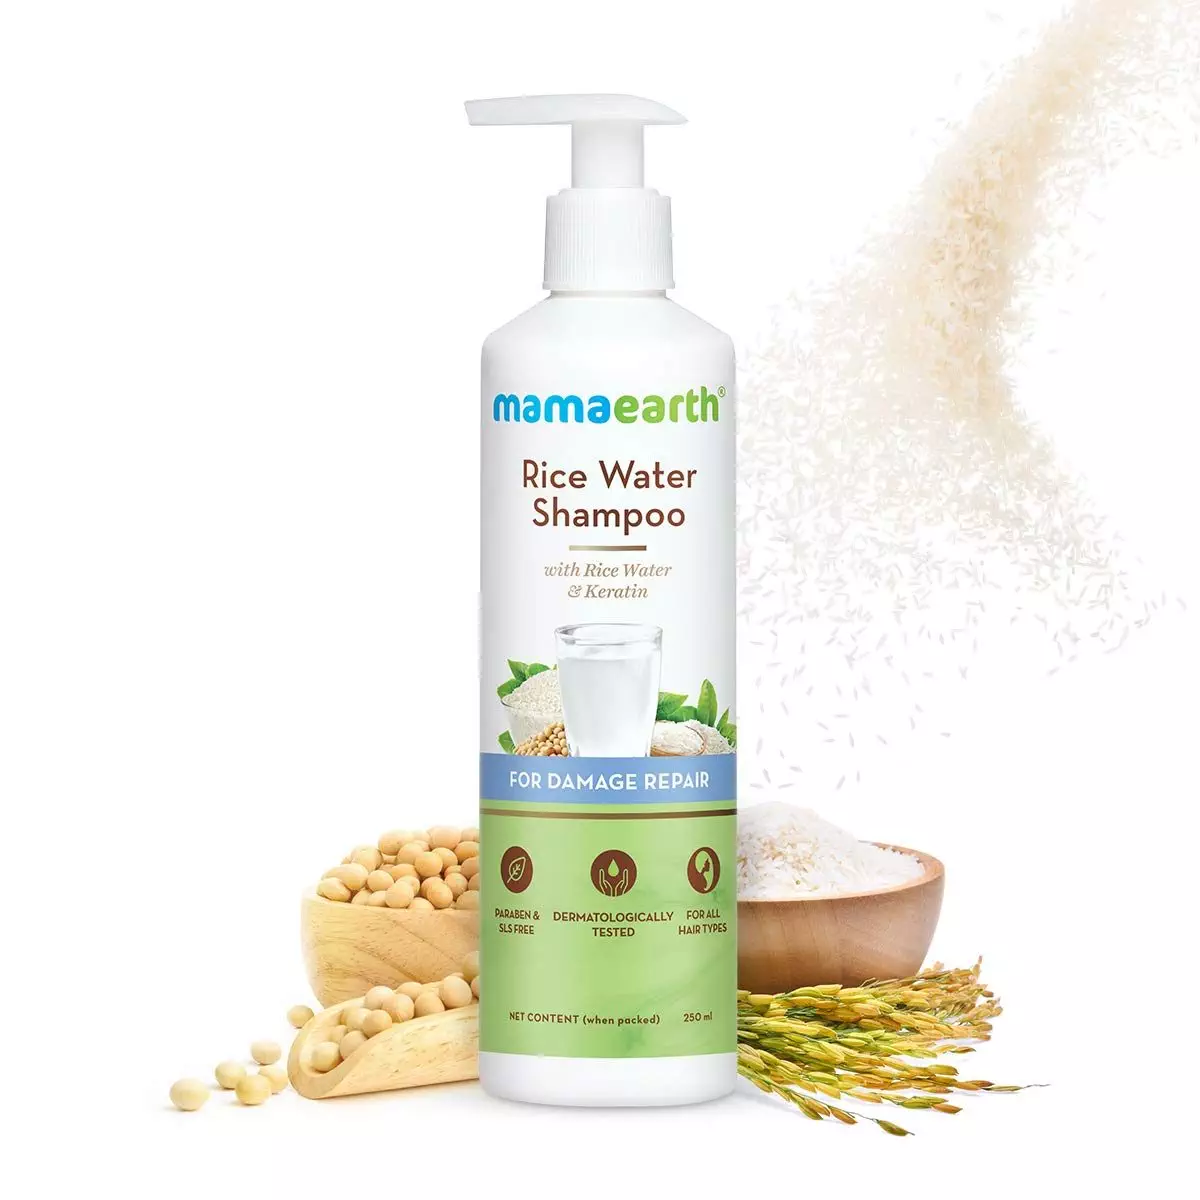 Mamaearth Rice Water Shampoo Review 16